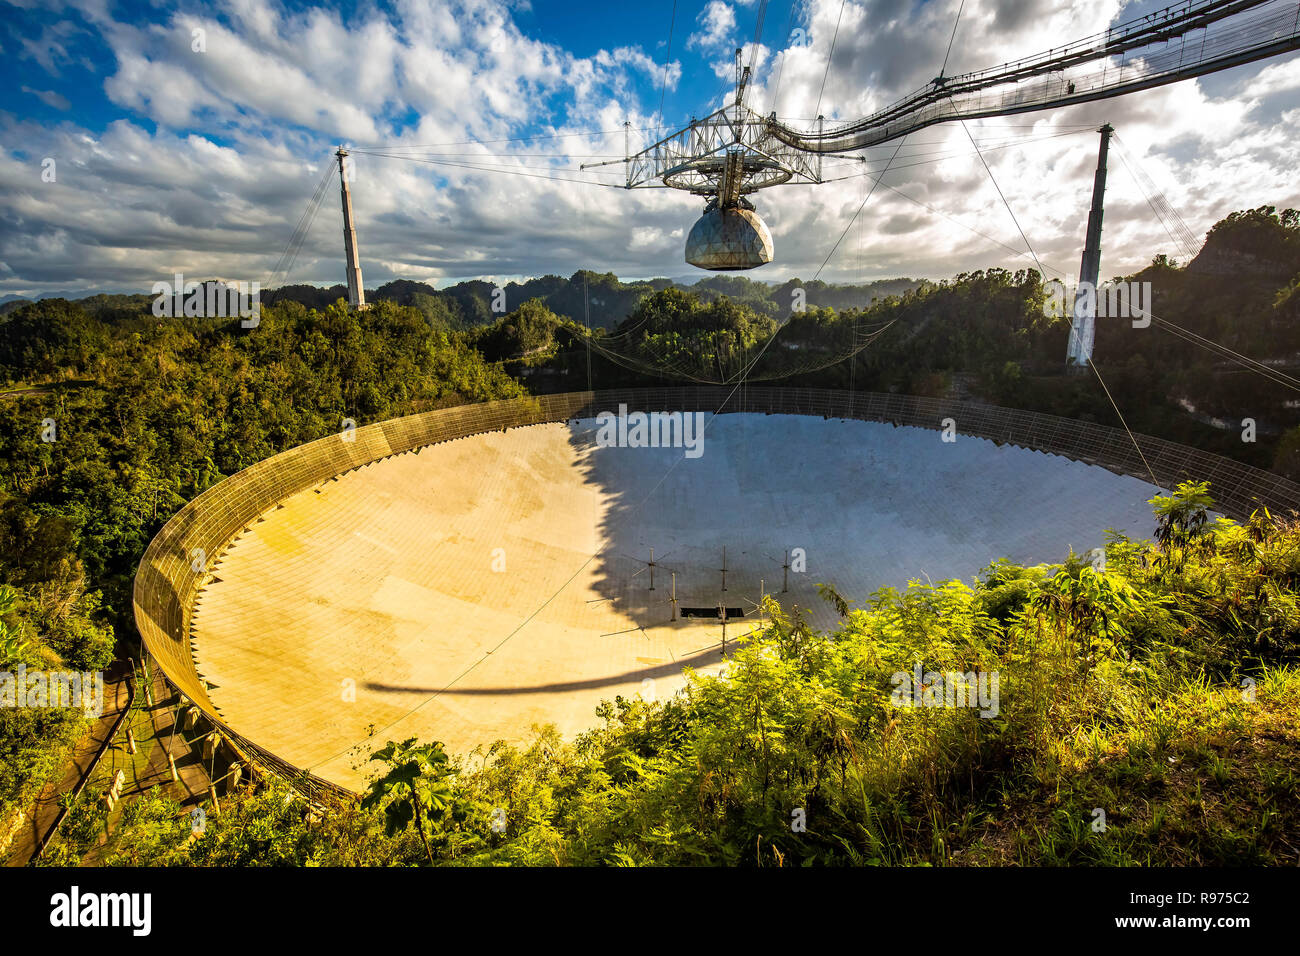 Large radio telescope dish in Arecibo national observatory Stock Photo